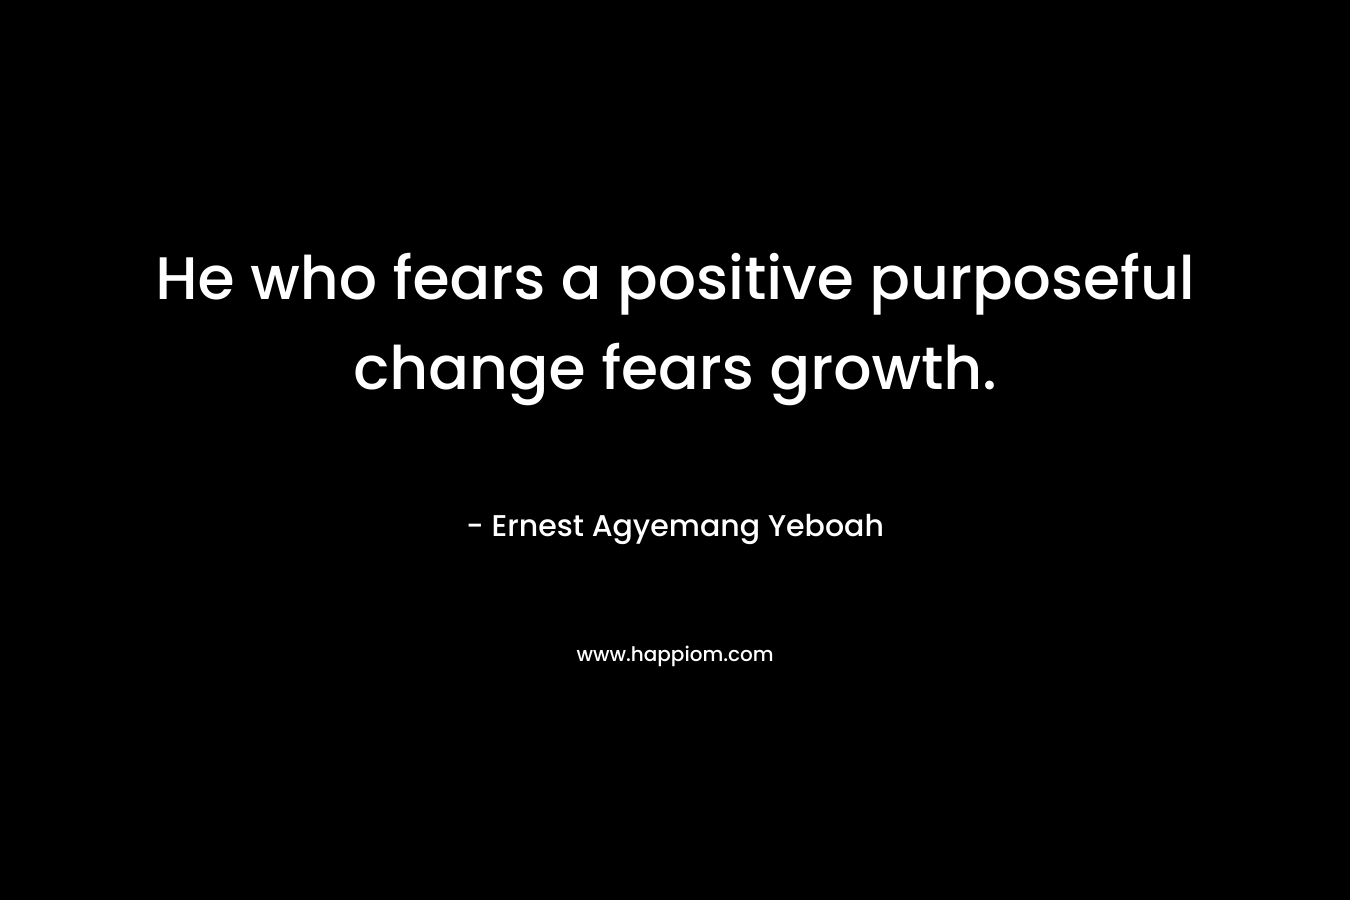 He who fears a positive purposeful change fears growth.